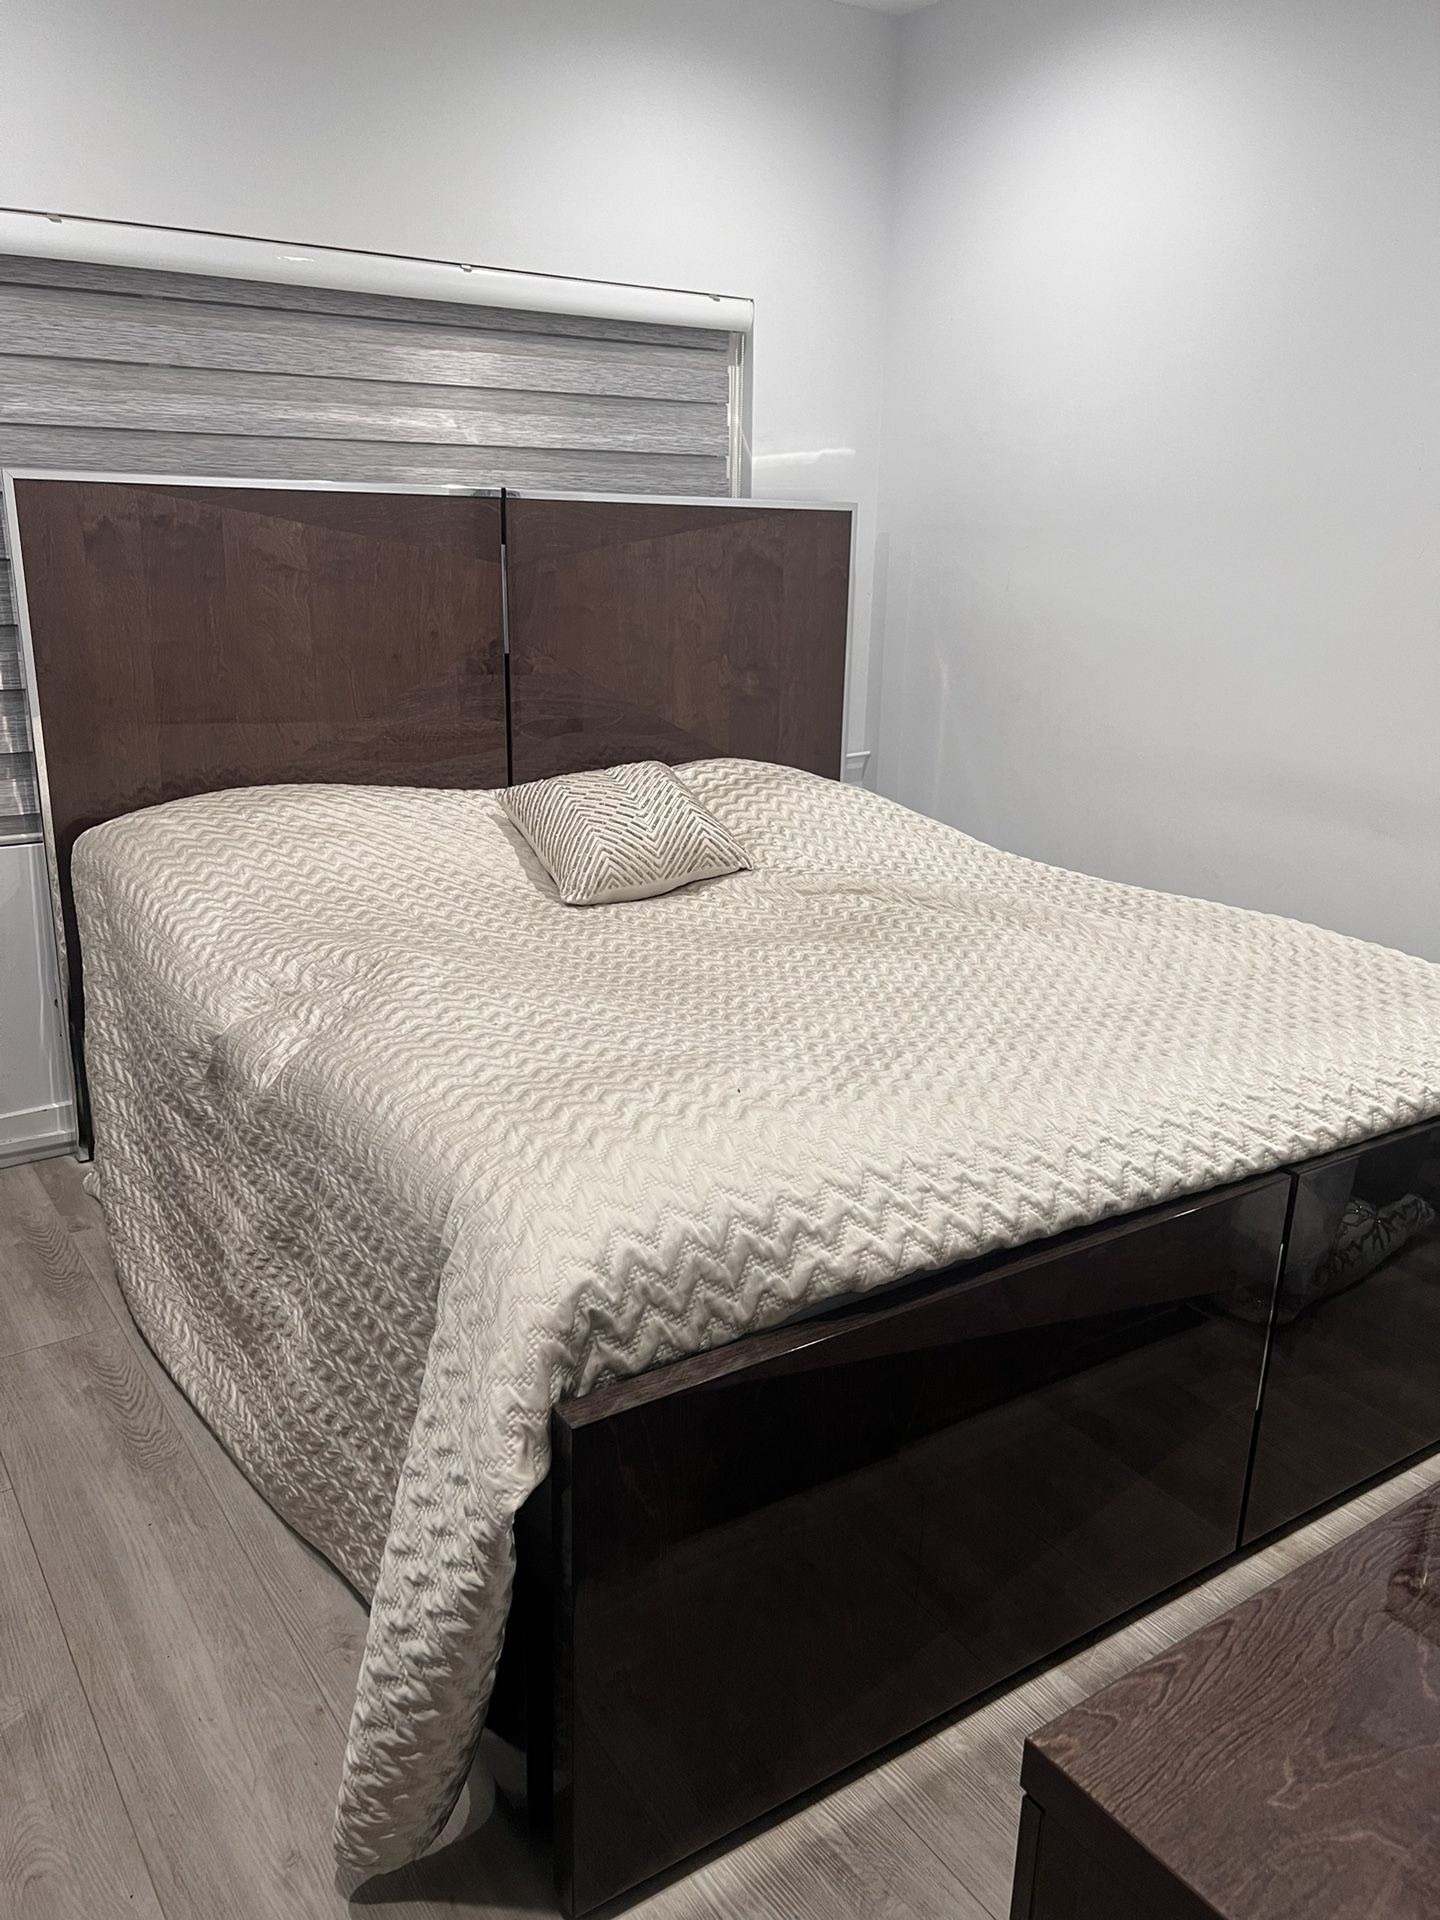 King Size Italian Bed W 2 Night Stands Dresser And Mirror + tempur-pedic Mattress